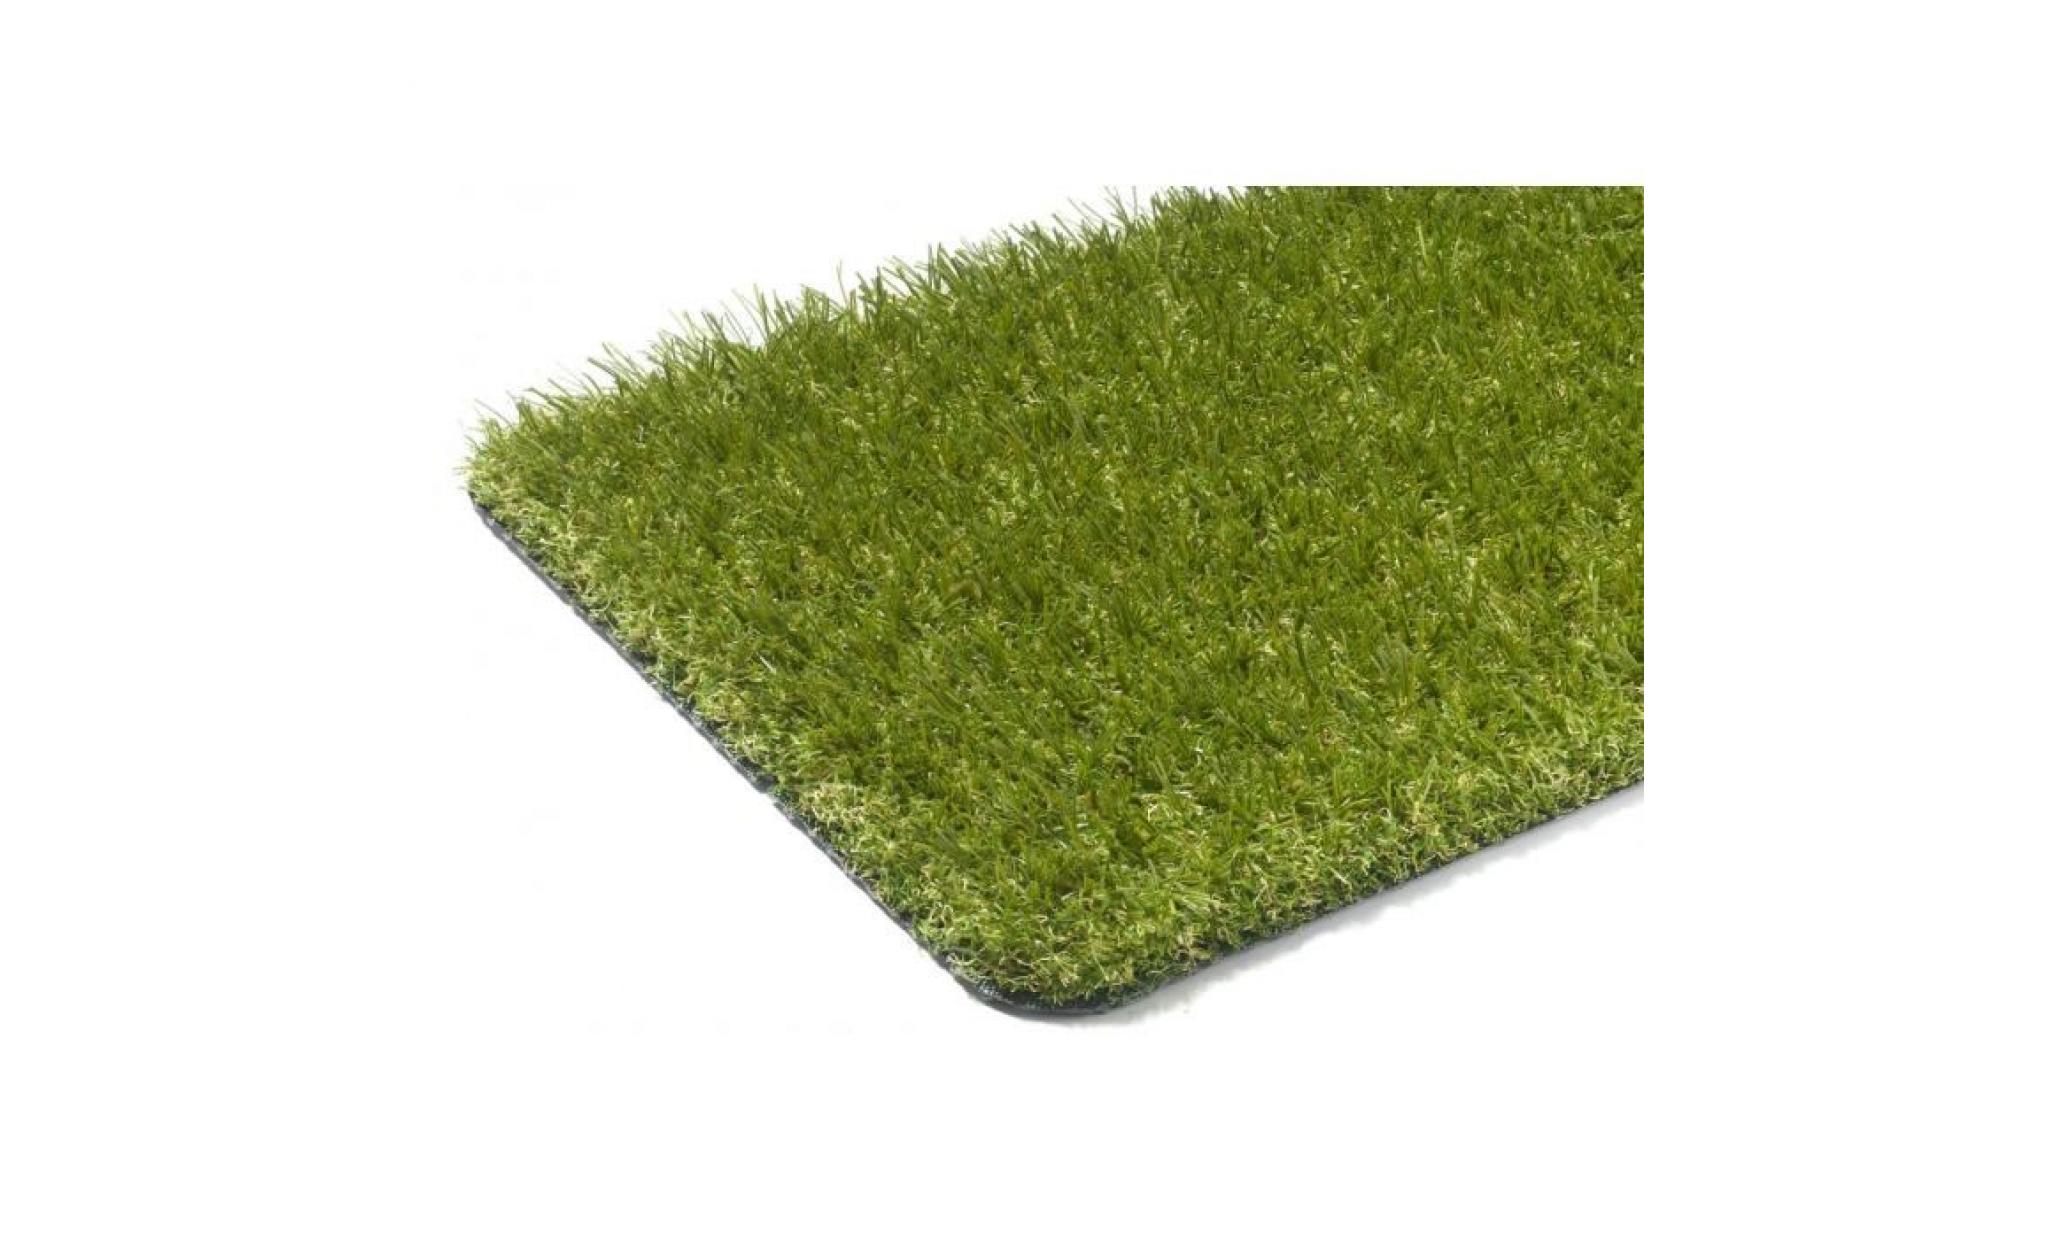 wembley   tapis type luxe gazon artificiel – pour jardin, terrasse, balcon   vert  [200x500 cm]